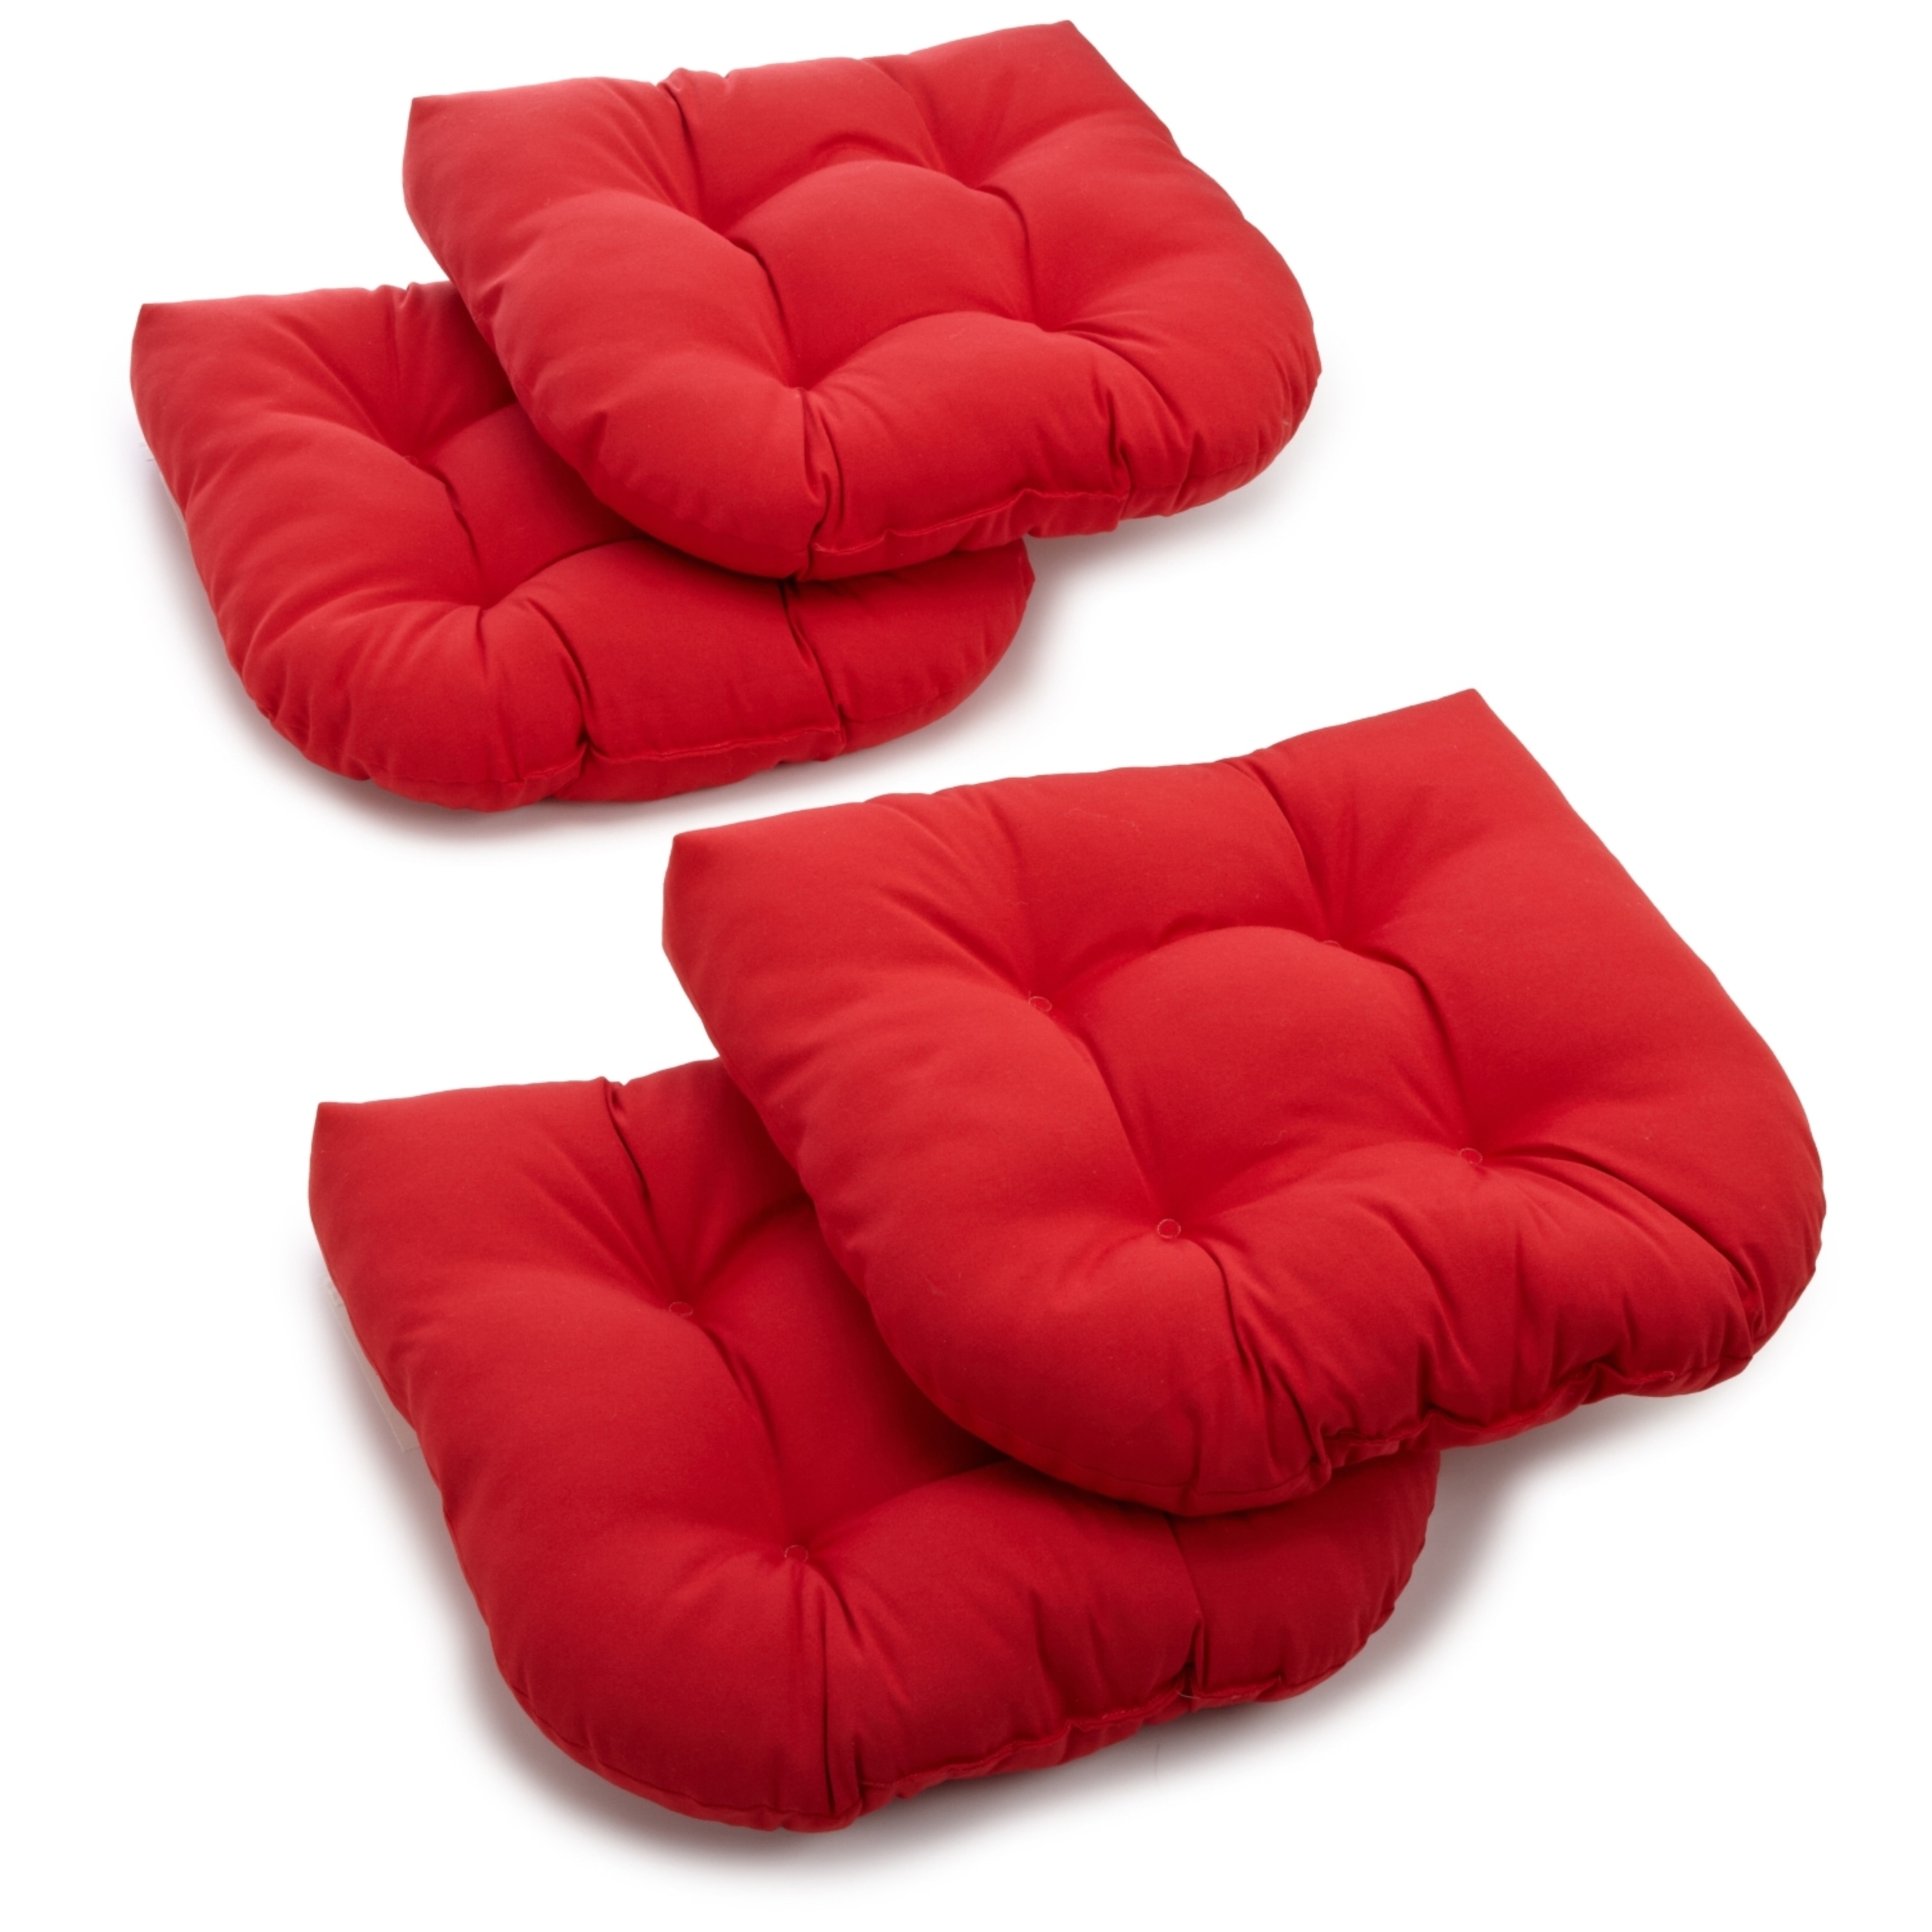 Cushions Chairs, U-shape Chair Cushion, U-shape Seat Cushion, Chair Cushion  With Ties, Vinous Cushion 